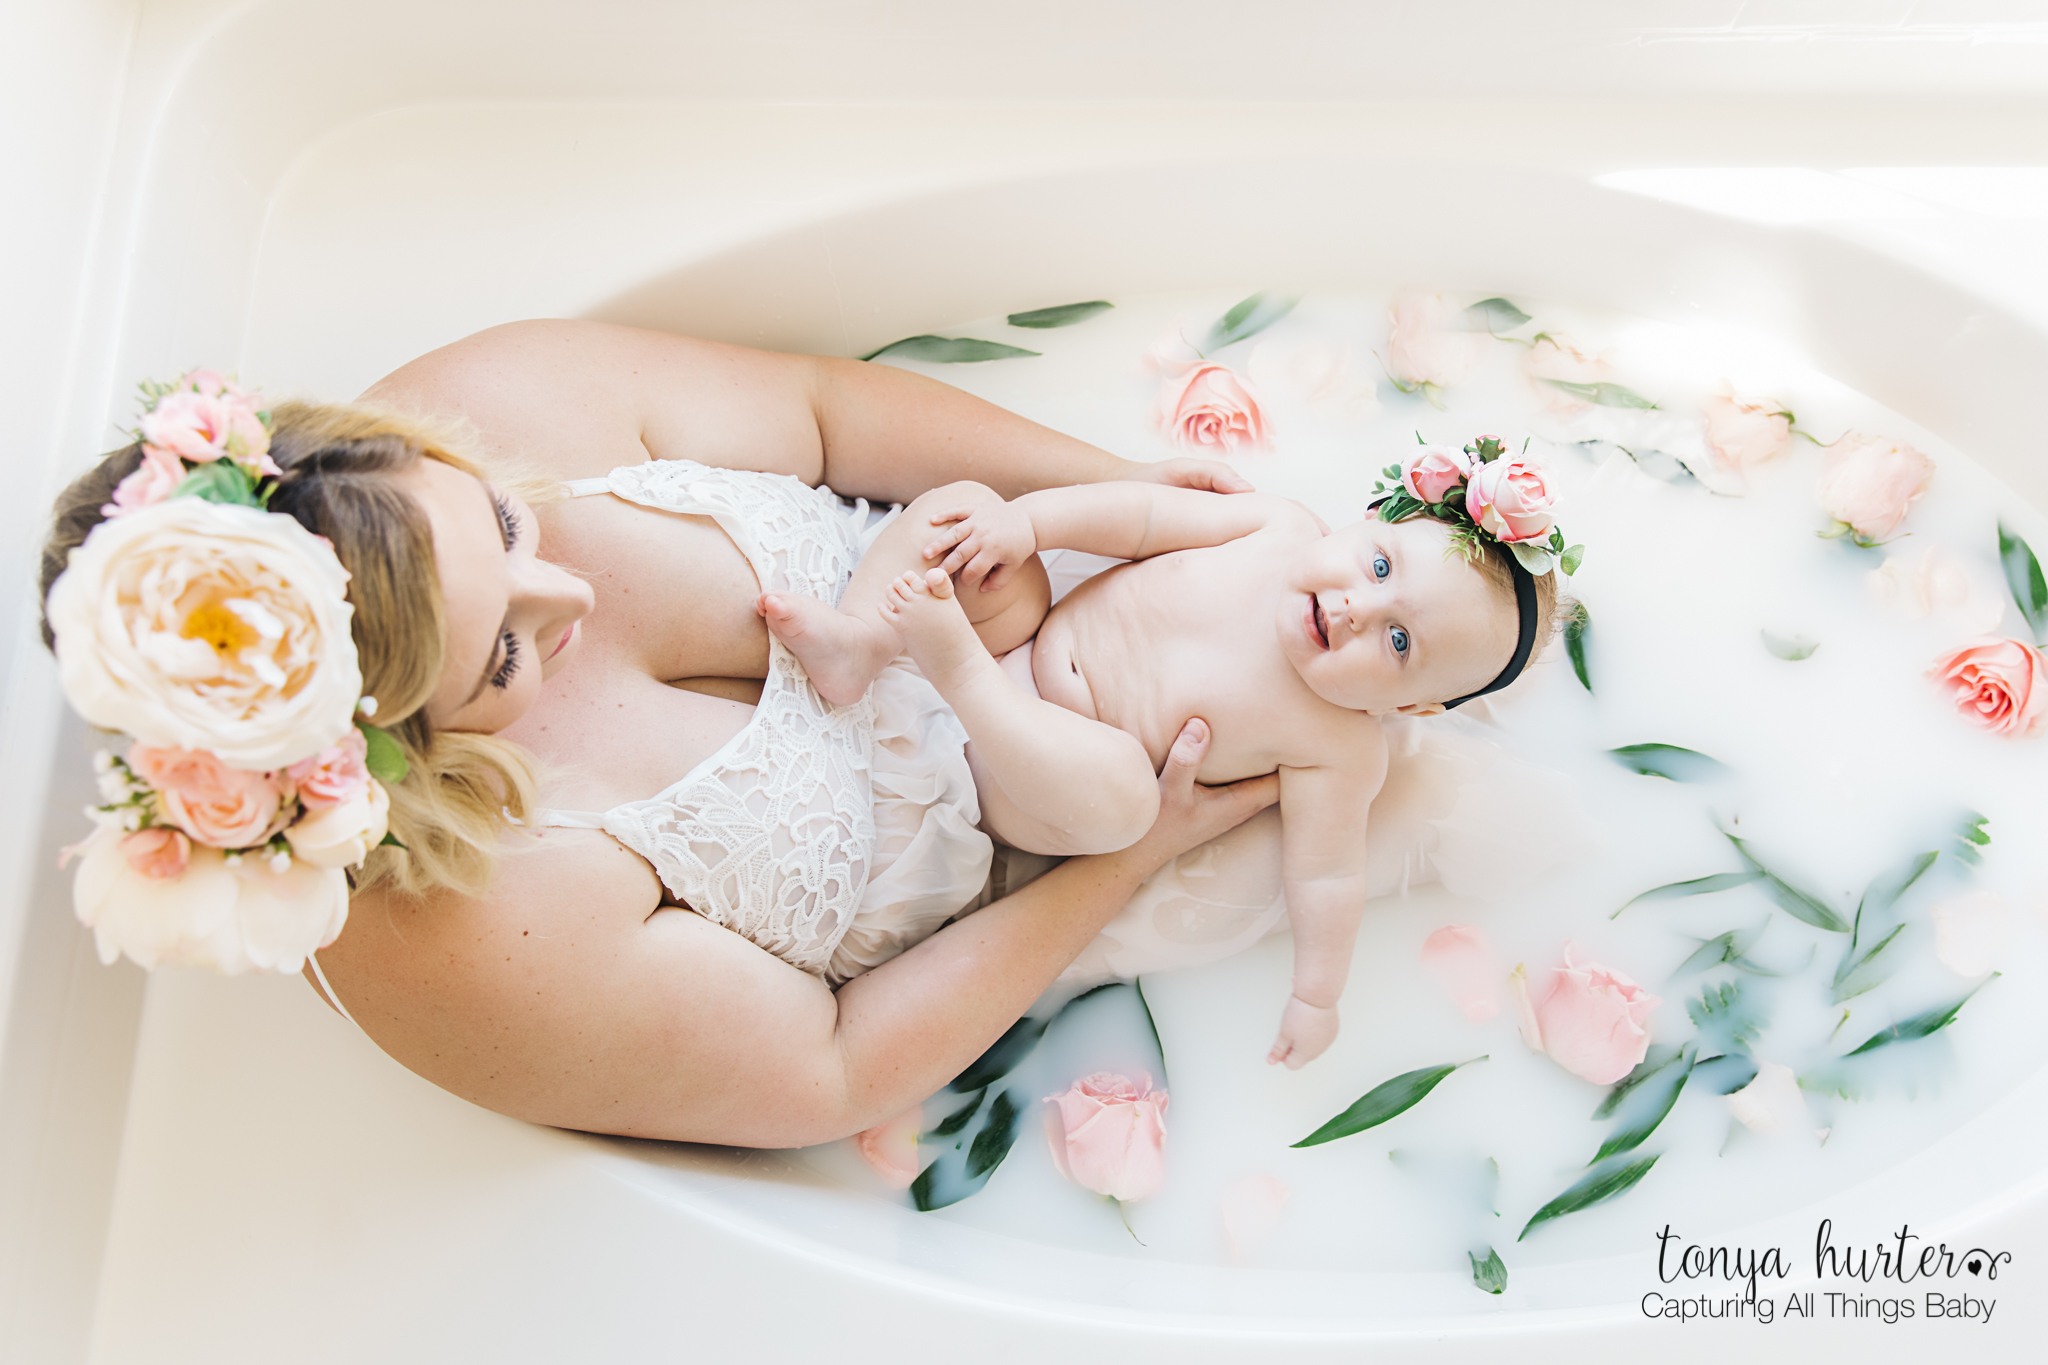 Mother and baby milk bath photo shoot Tonya hurter photography 2017